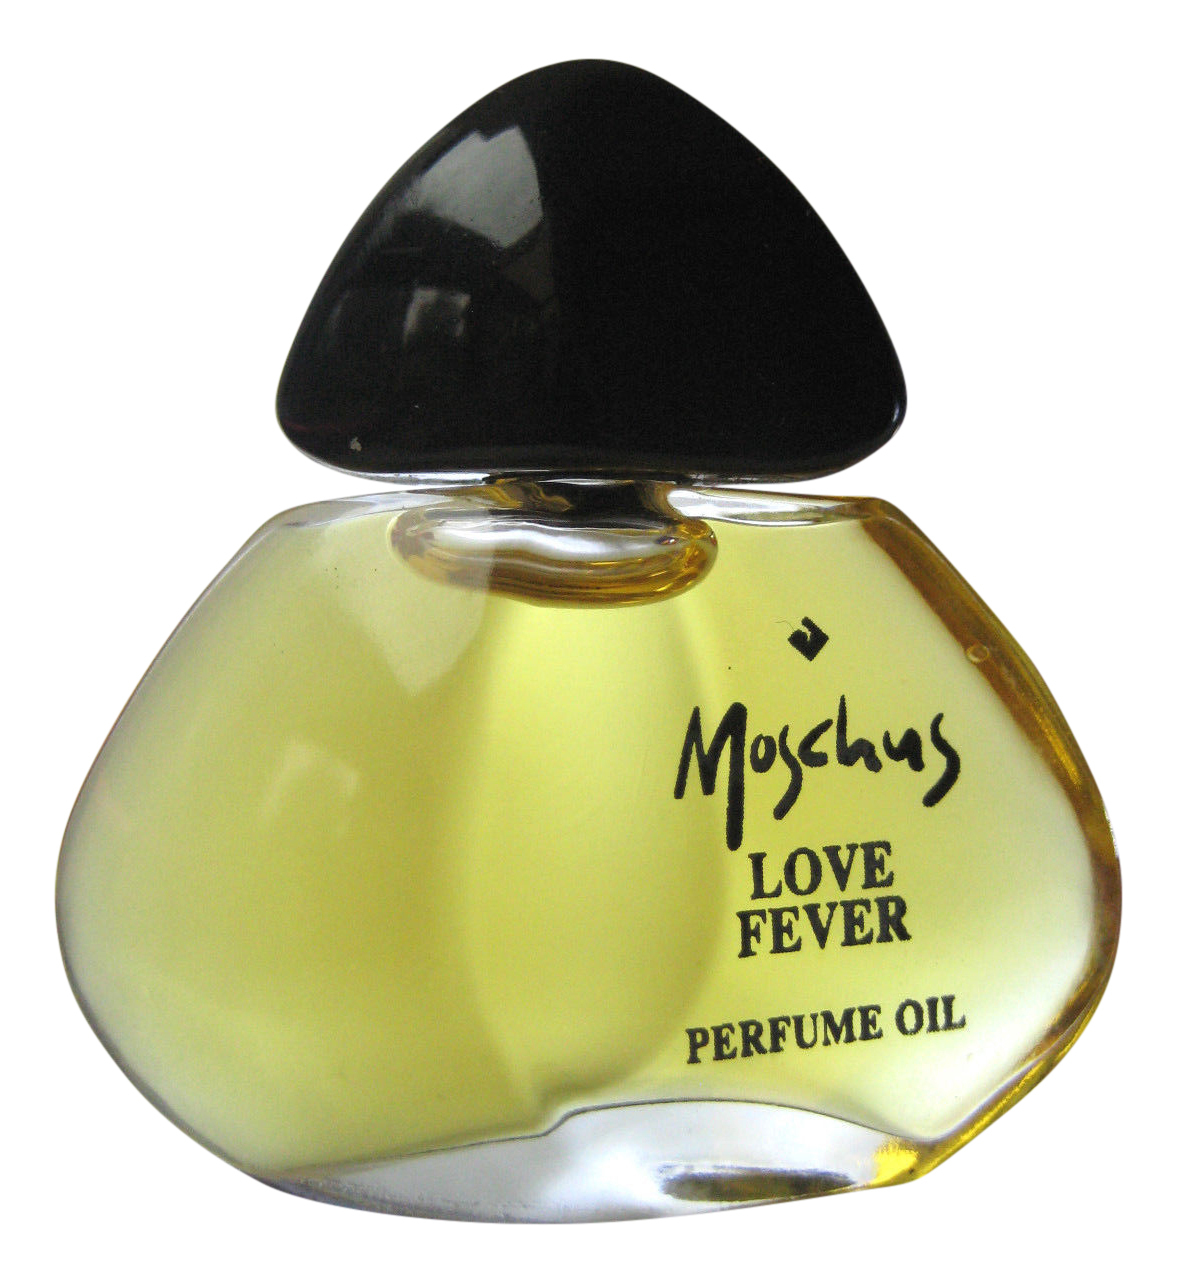 Moschus Love Fever (Perfume Oil) (Nerval) .